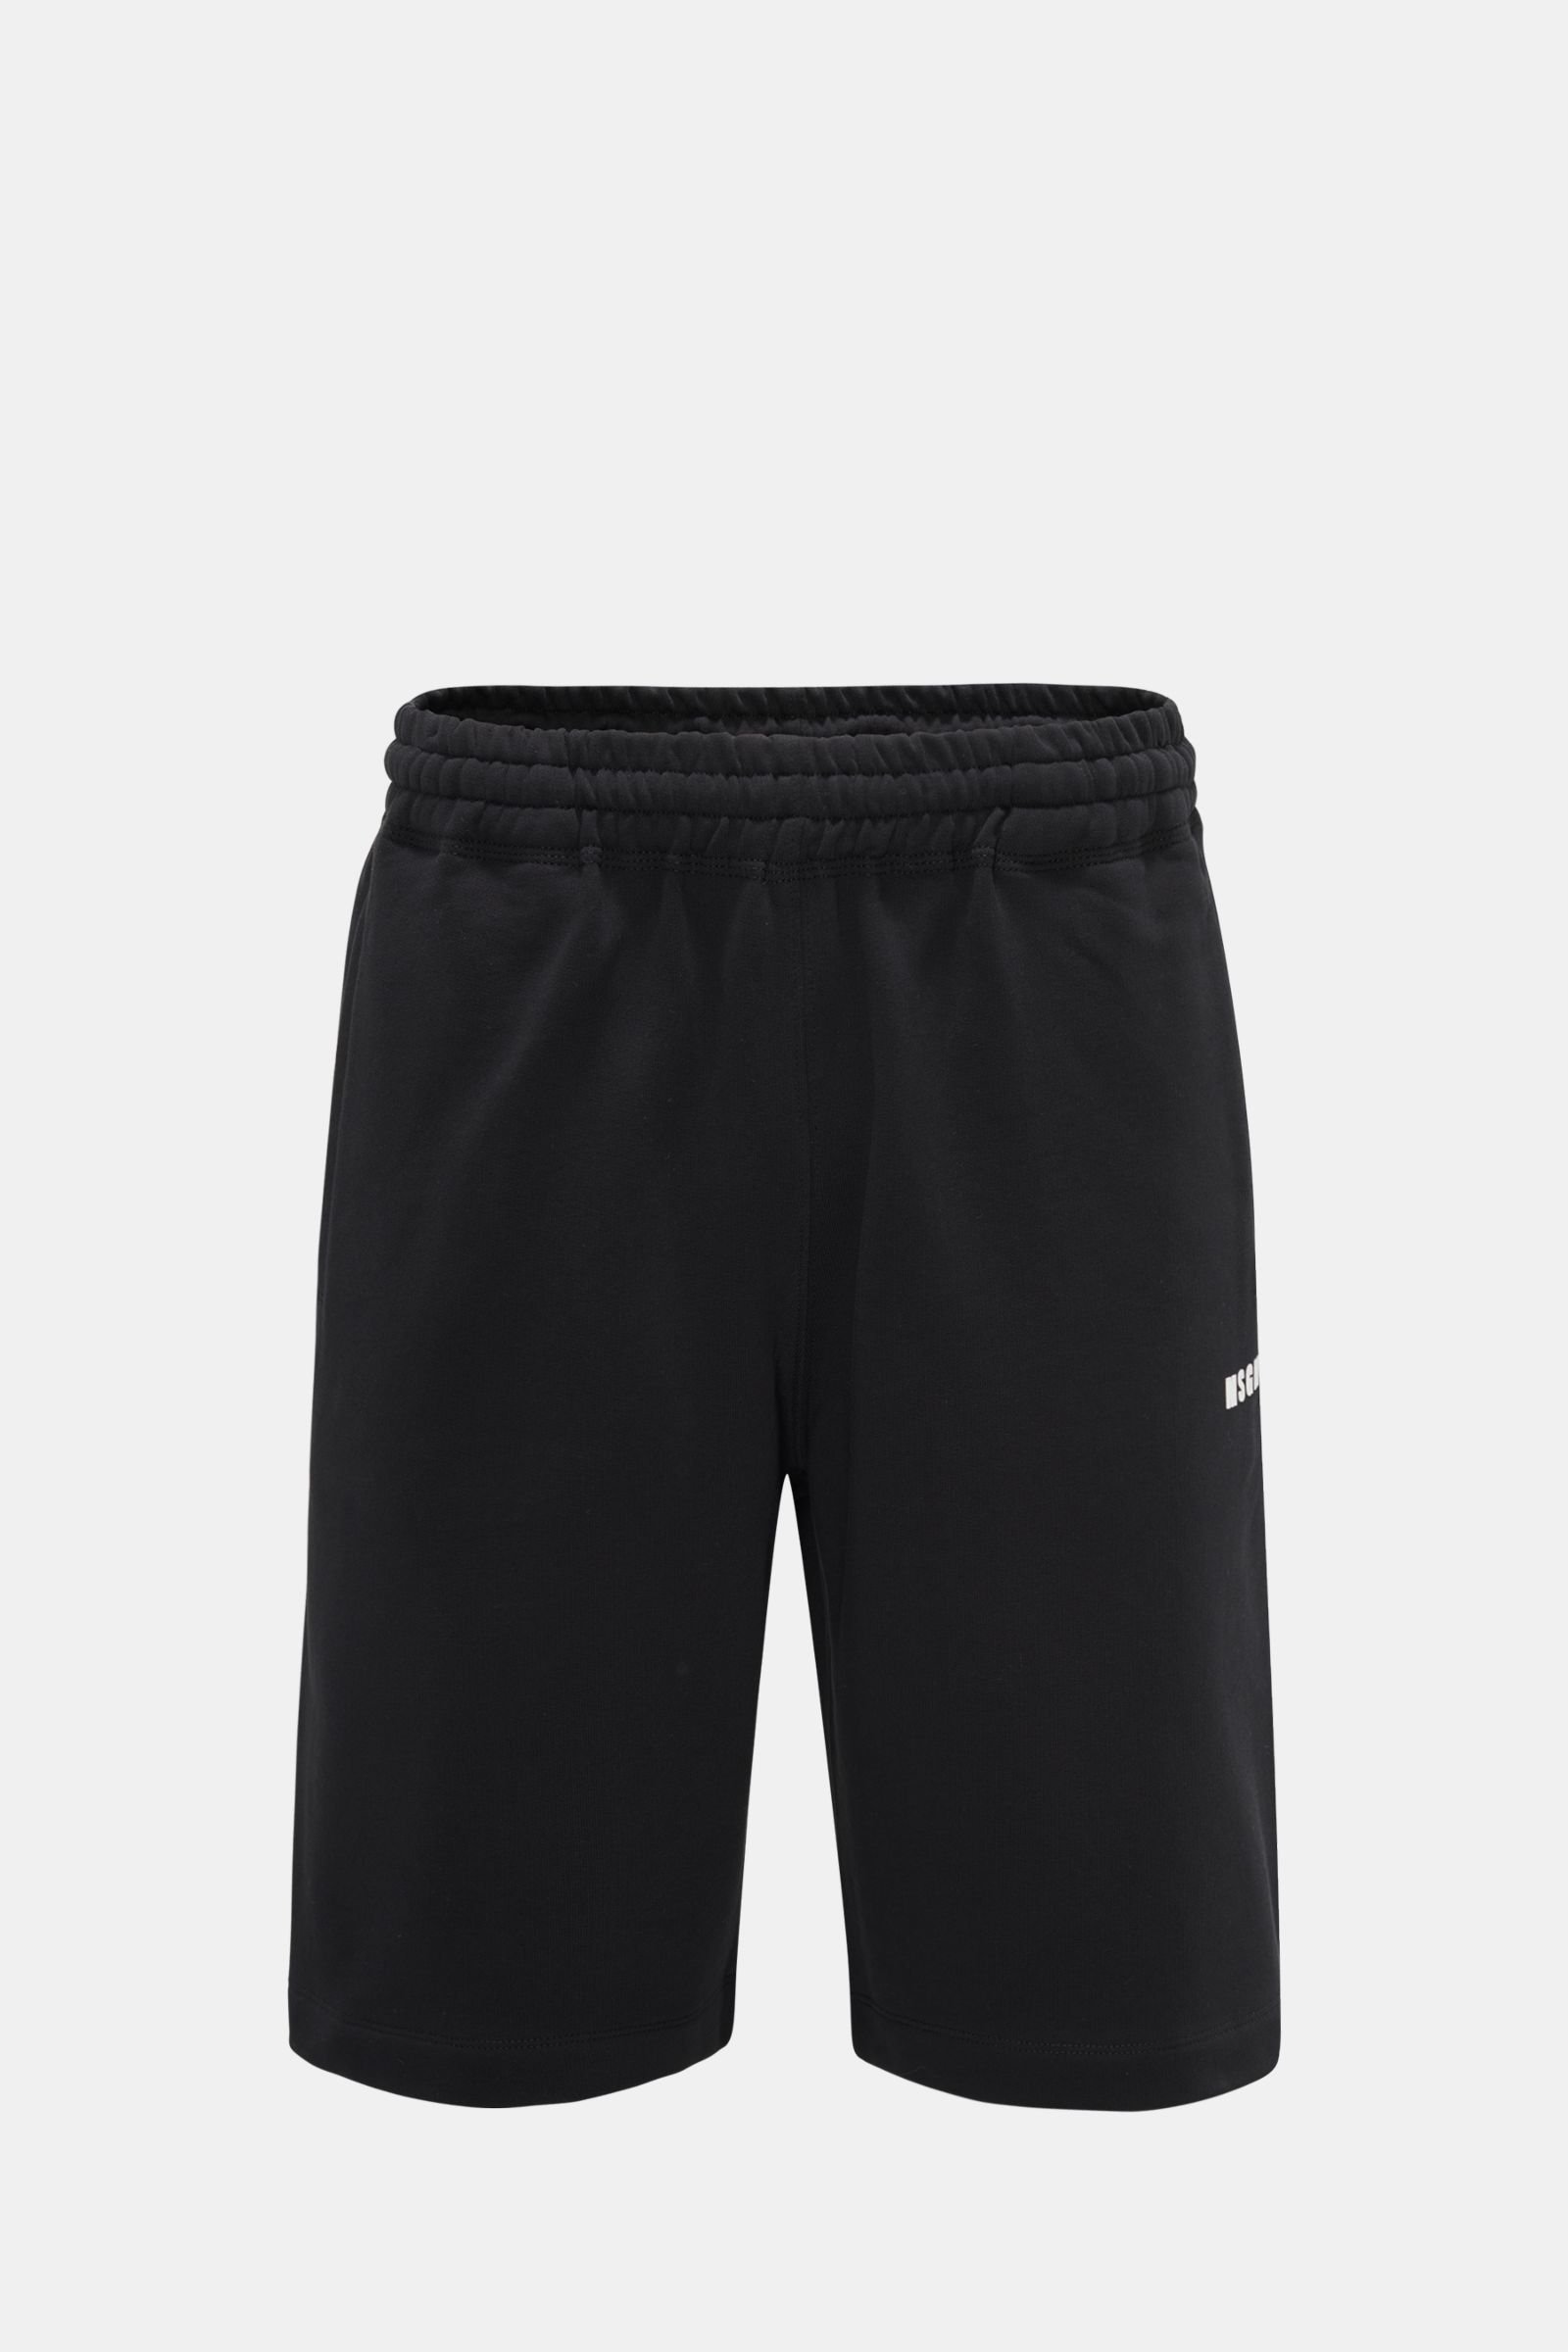 Bermuda sweat shorts black